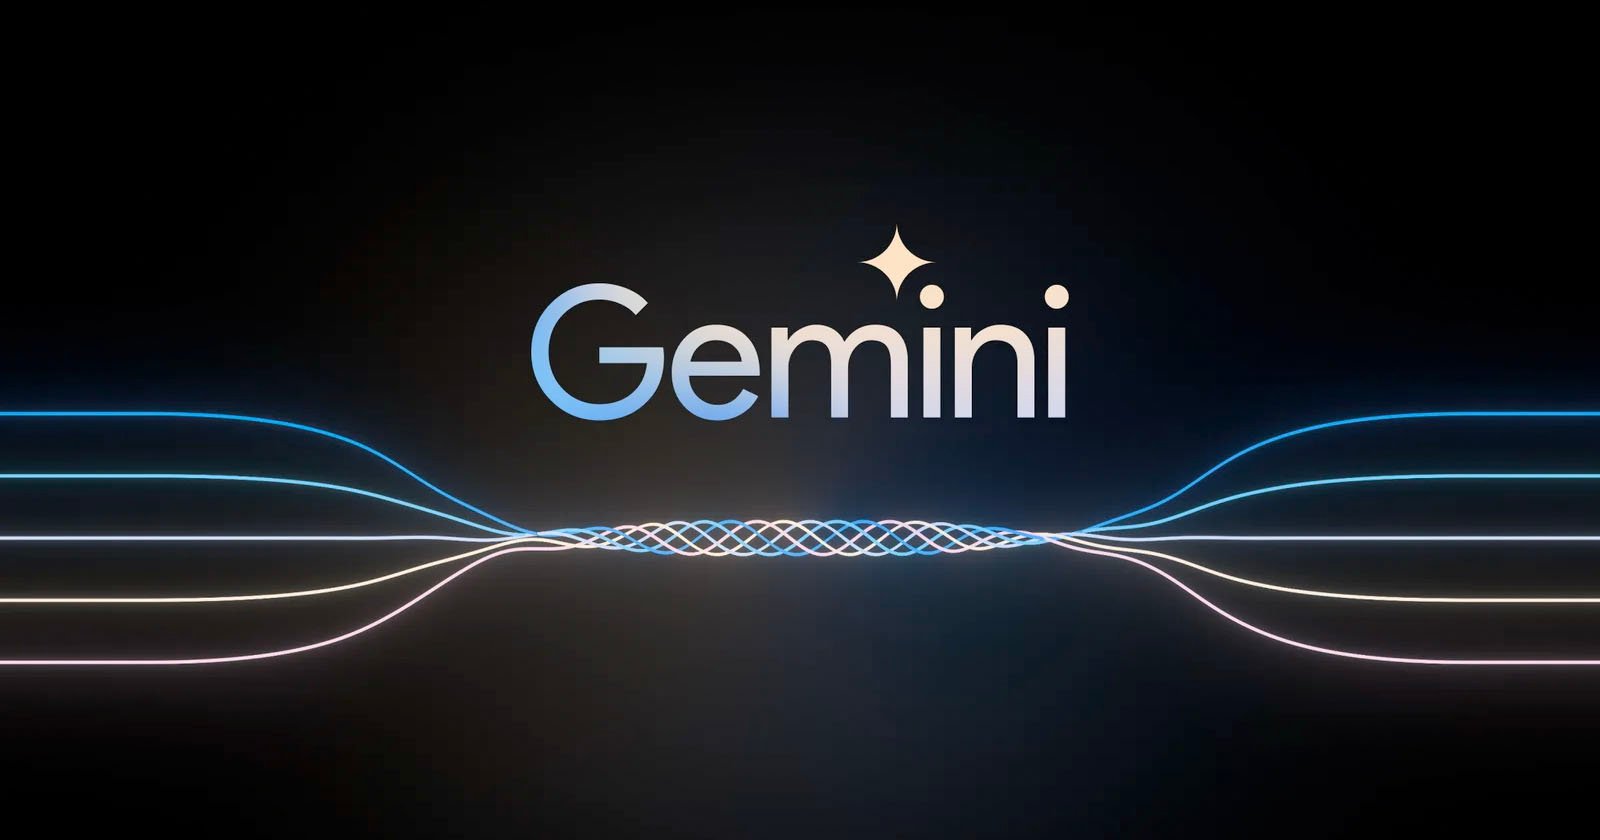  gemini google most capable model arrives pixel 